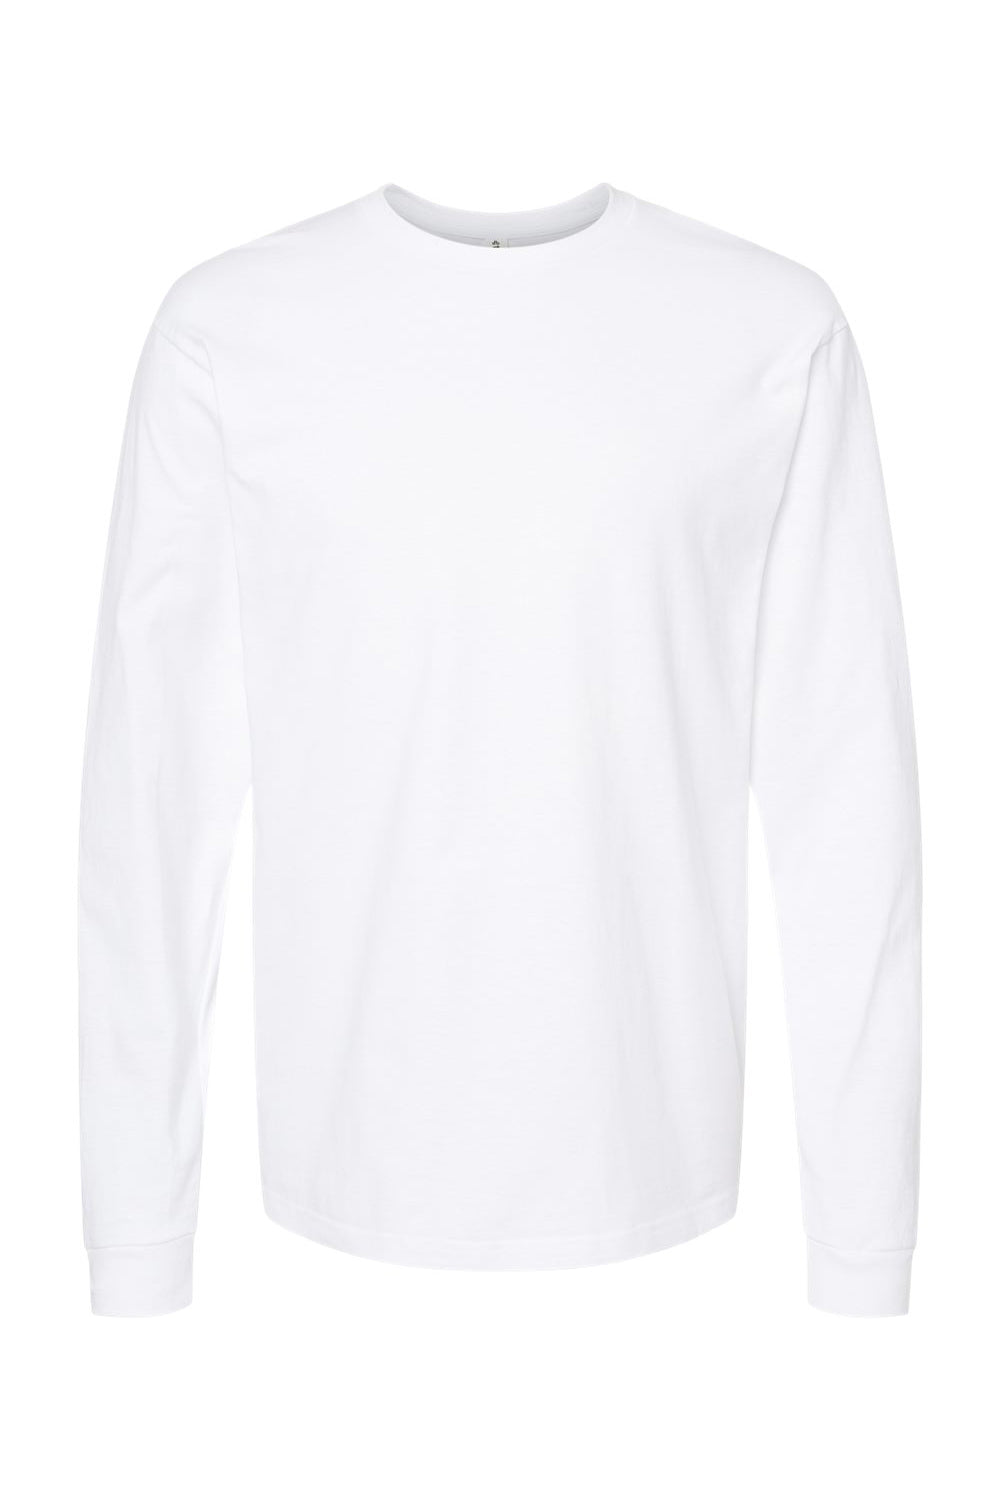 Tultex 291 Mens Jersey Long Sleeve Crewneck T-Shirt White Flat Front